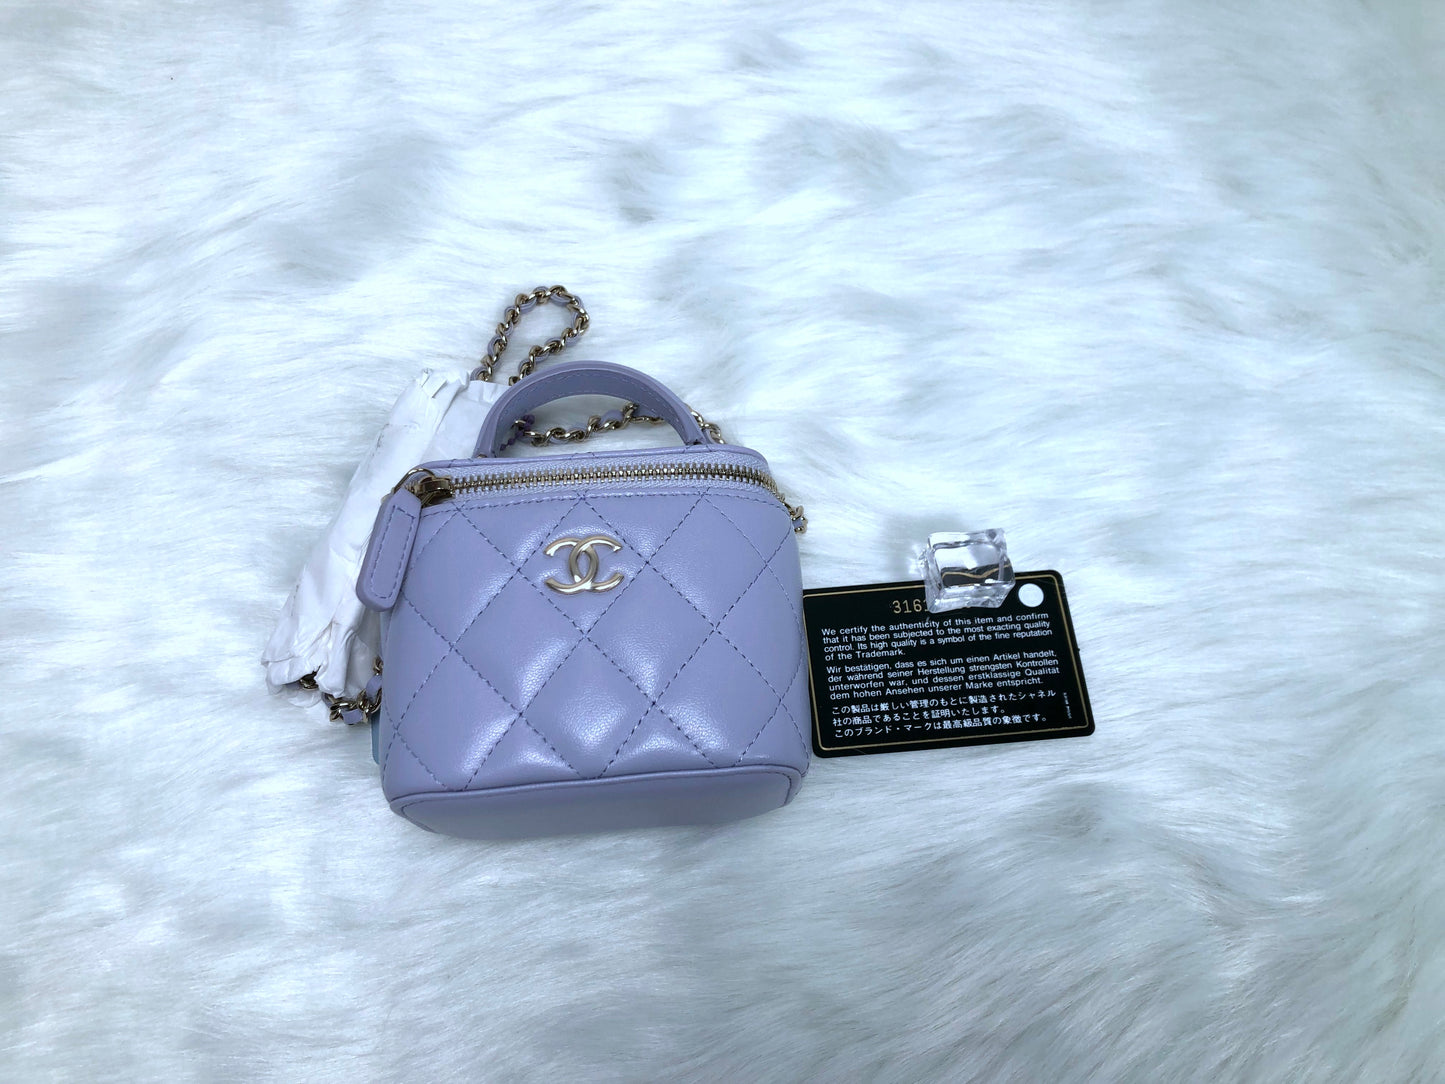 Chanel 粉紫色羊皮銀扣有柄方盒子小包